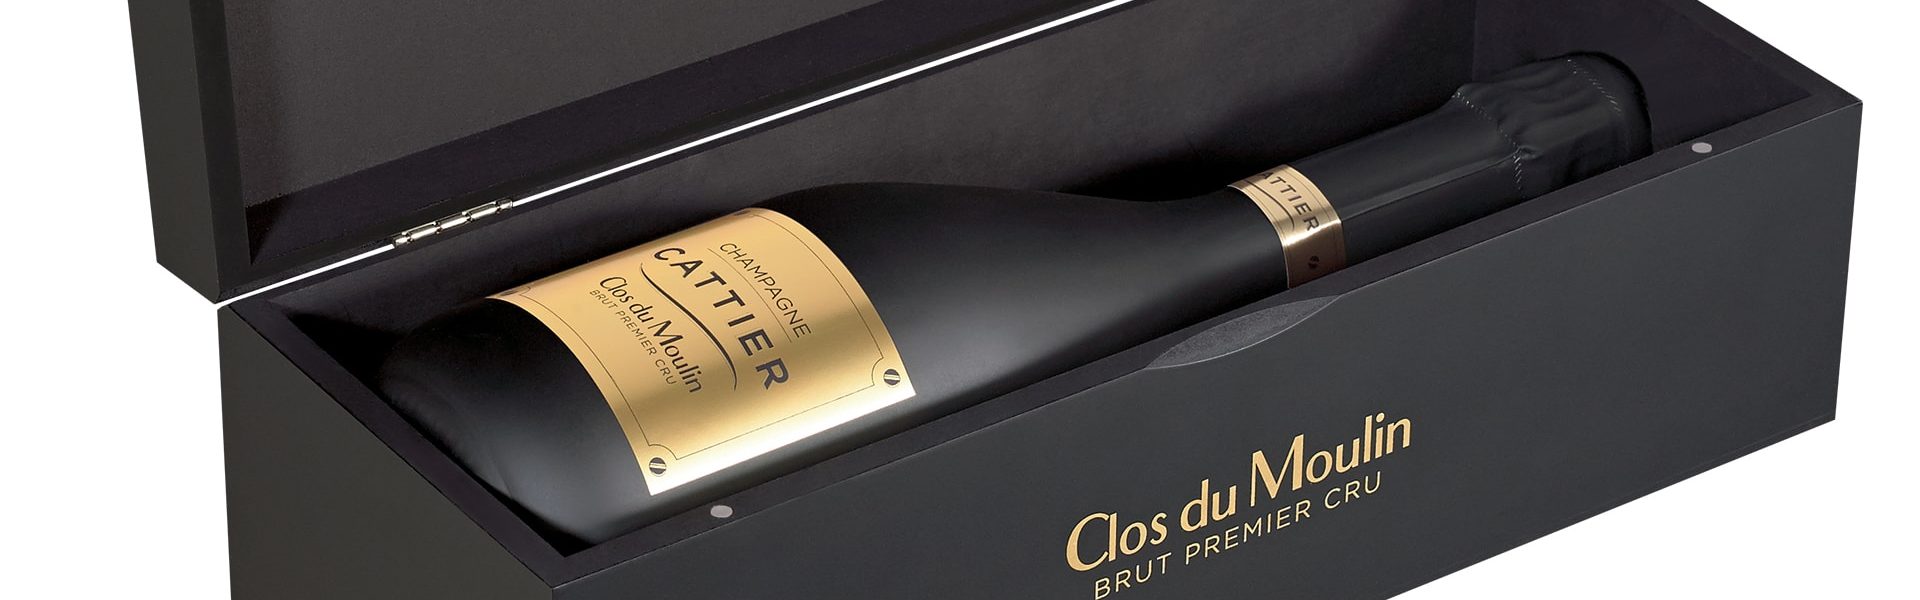 Cattier Champagne is proud to release the new Clos du Moulin Brut Premier box